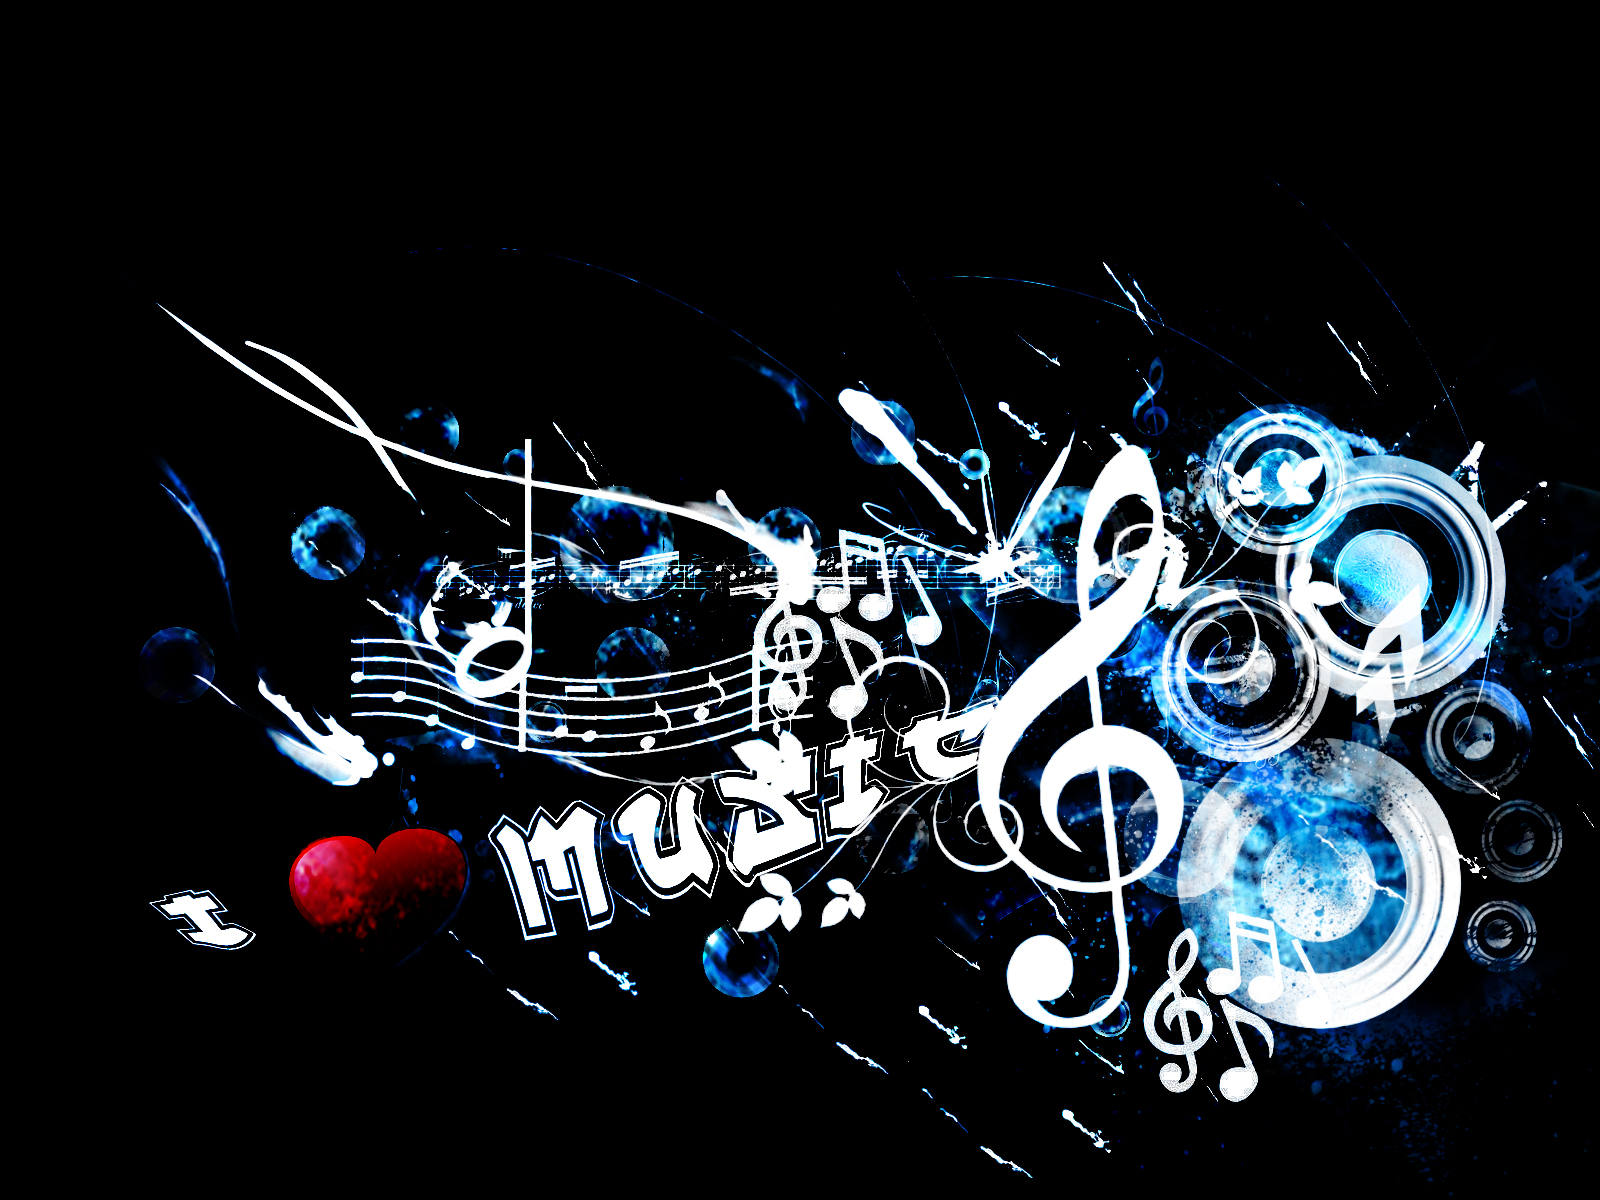 [50+] Free Music Wallpaper Backgrounds on WallpaperSafari